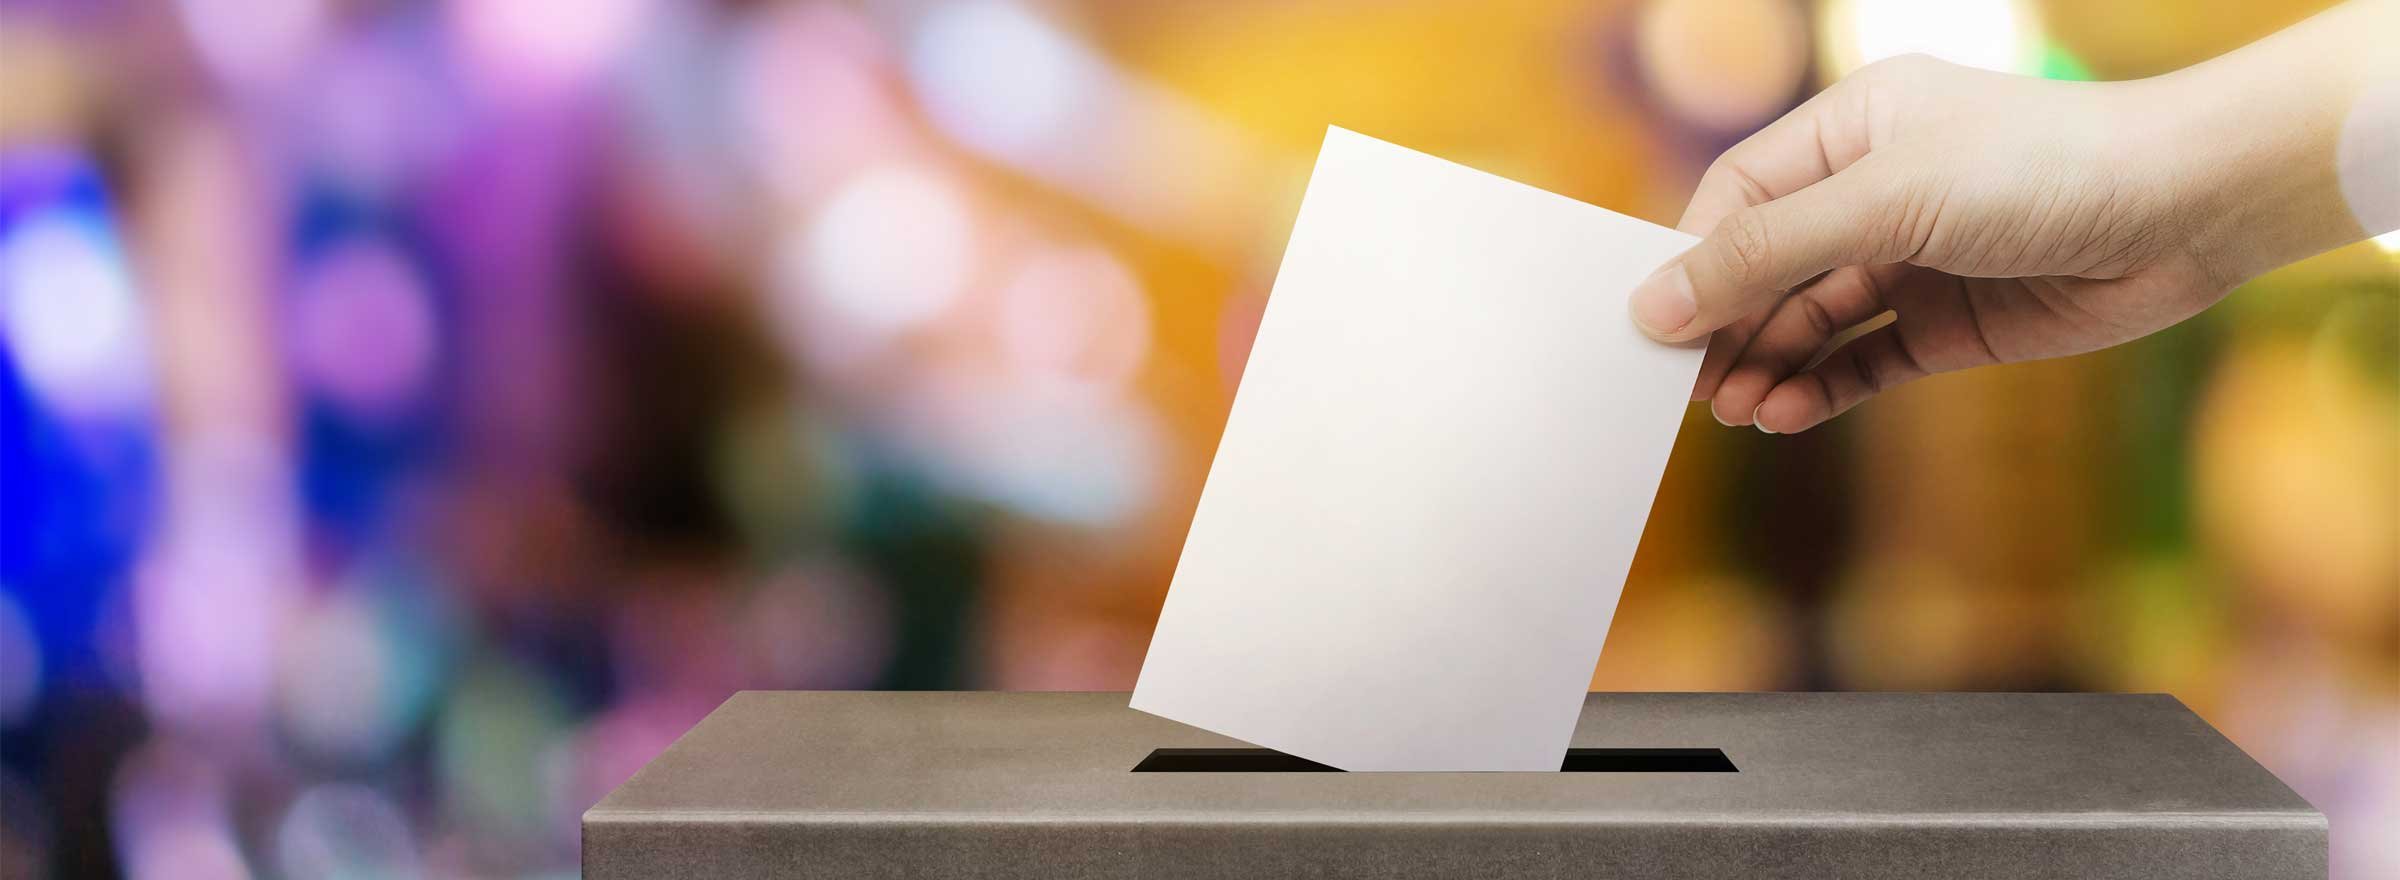 hand inserting a ballot into a box